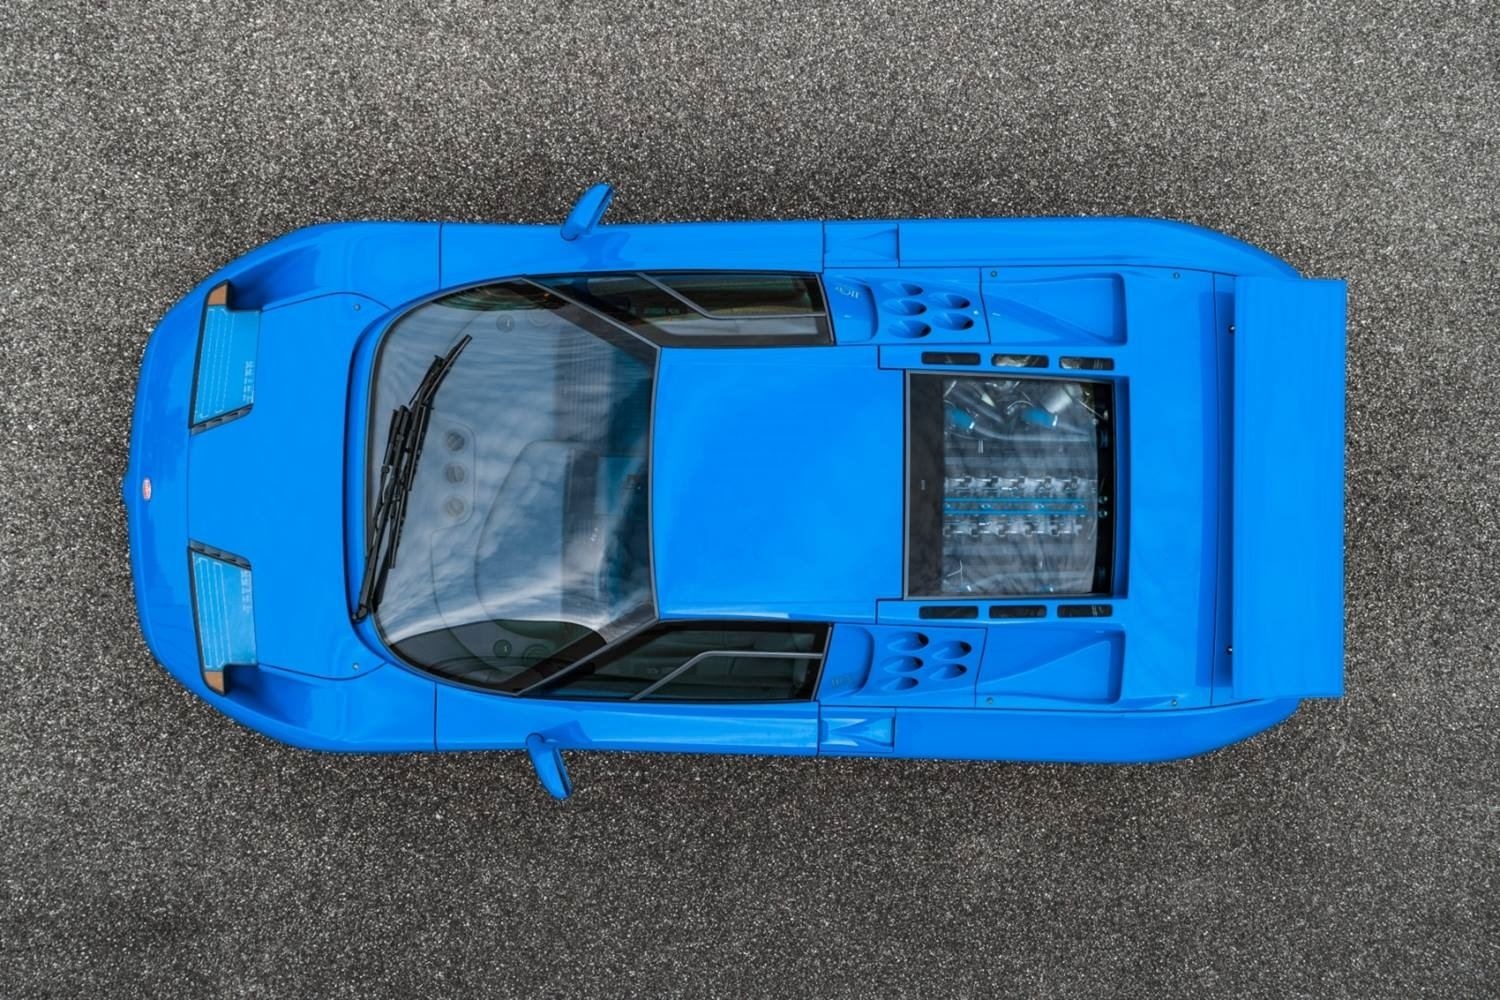 Bugatti EB110 Supersport